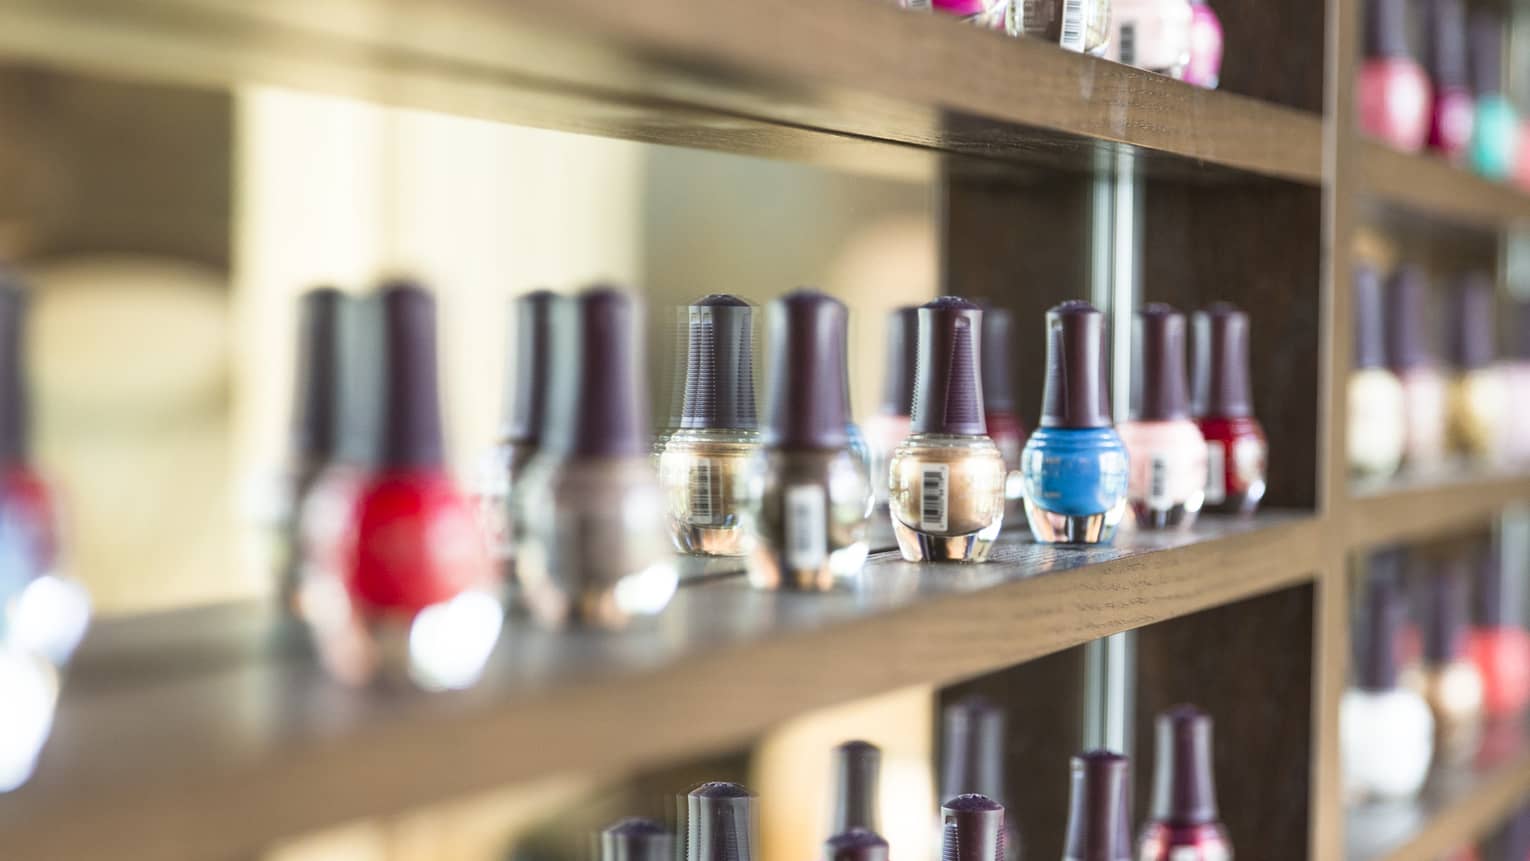 Nail polish bottles on a salon display shelf